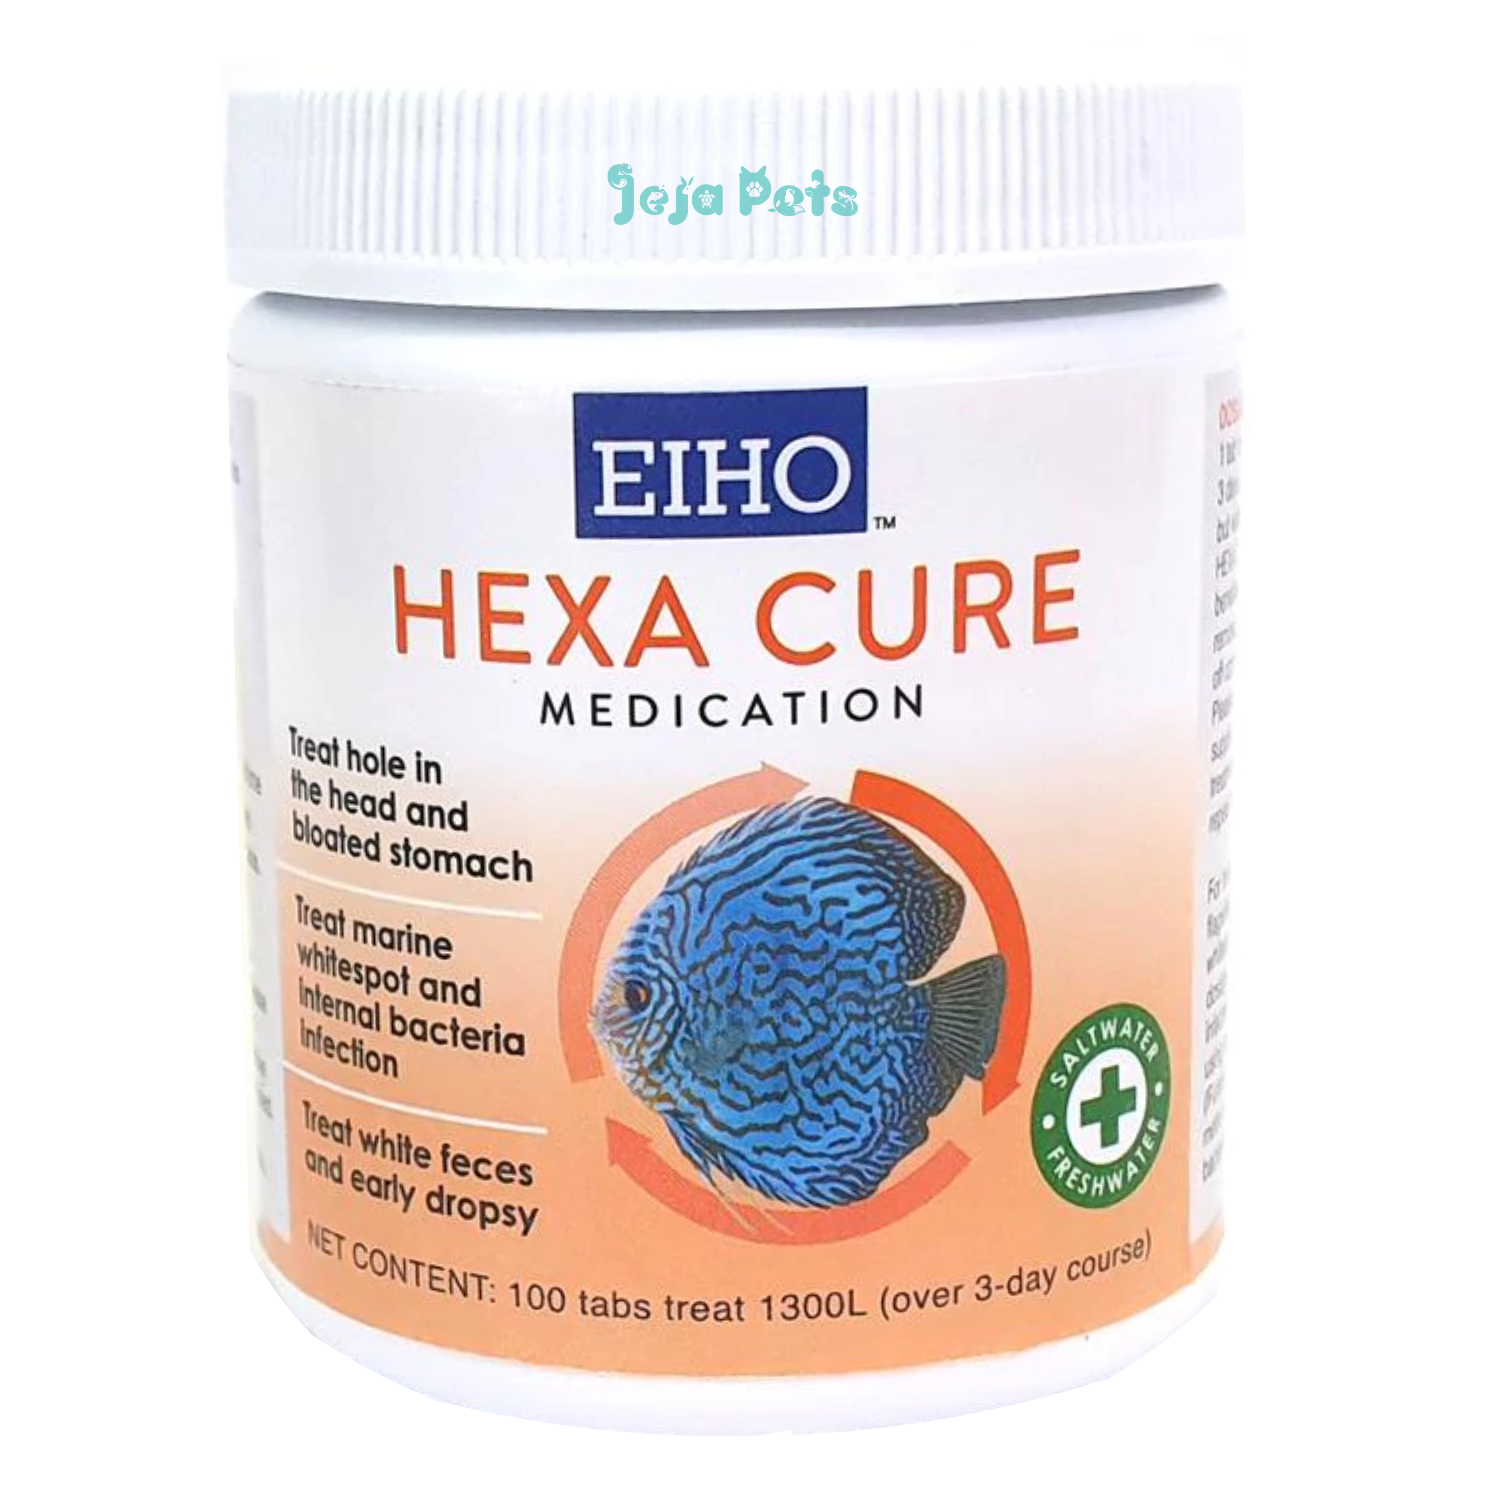 EIHO Hexa Cure (Metro Cure)  - 100 tabs